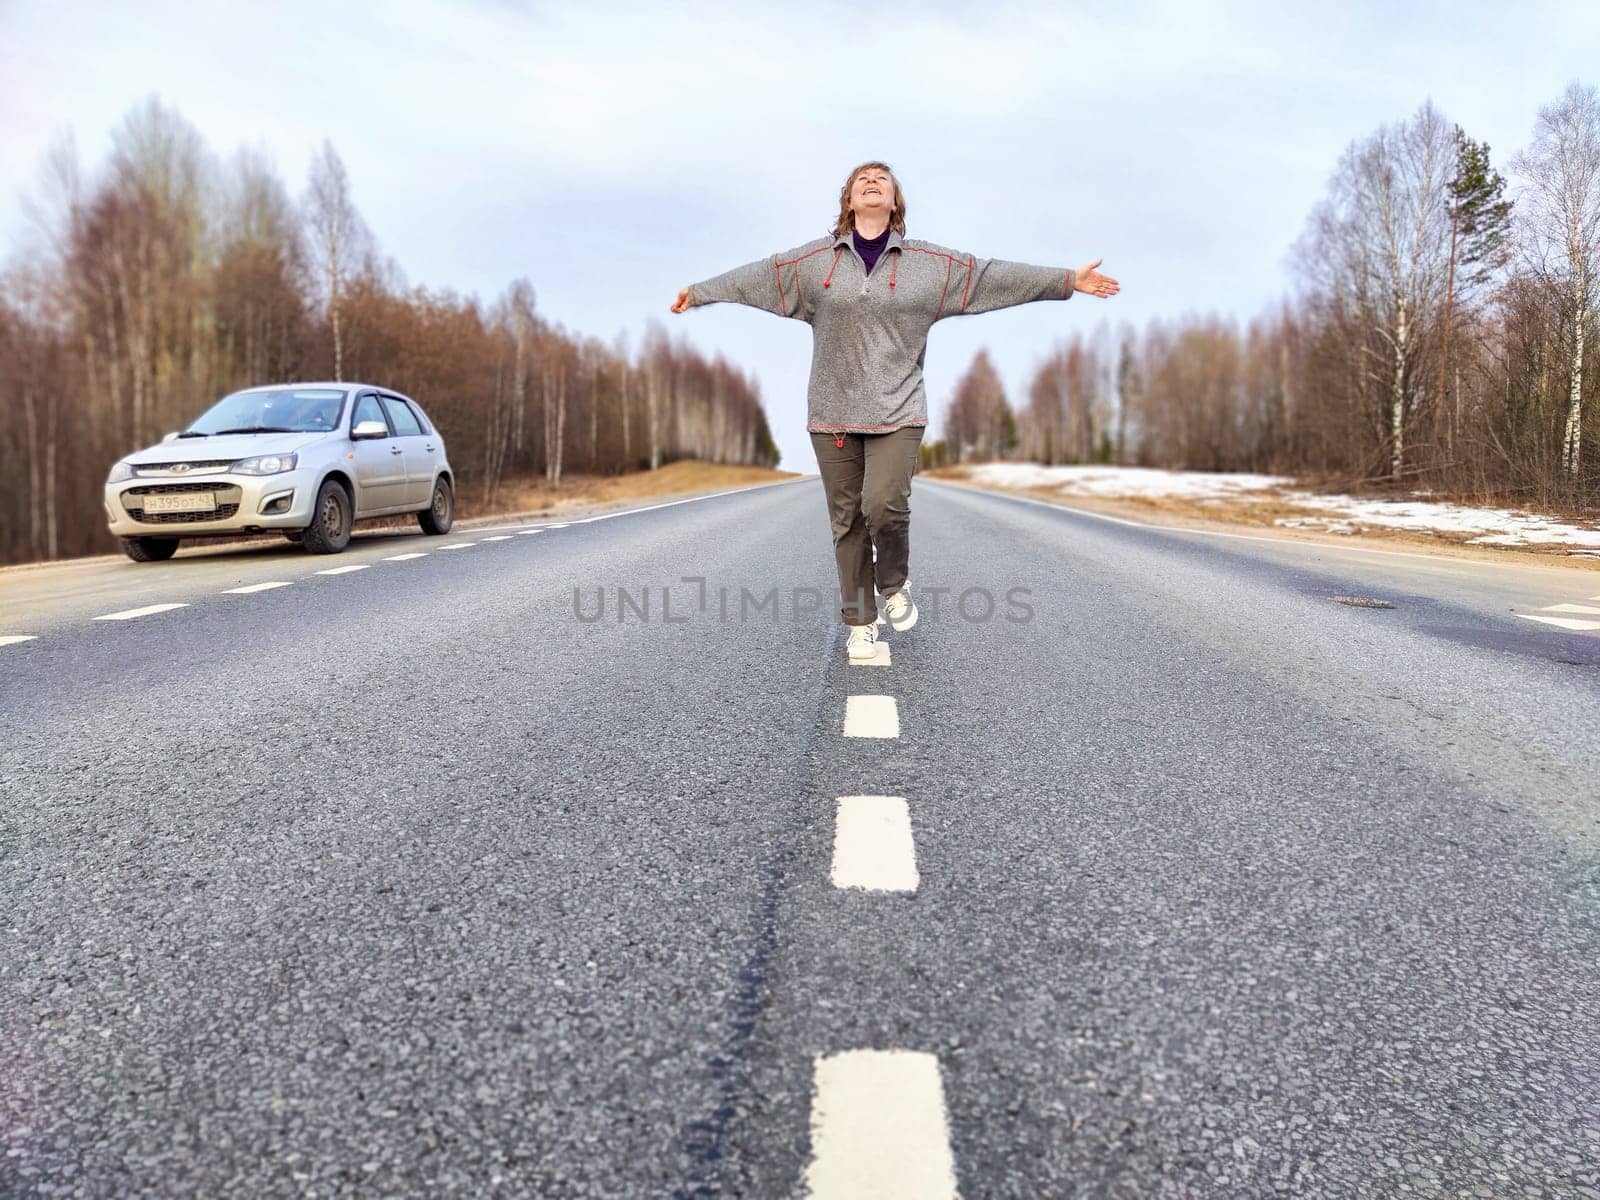 Woman Balancing on Road Marking During Roadside Travel Break. Woman enjoying playful balance walk next to parked car on roadside